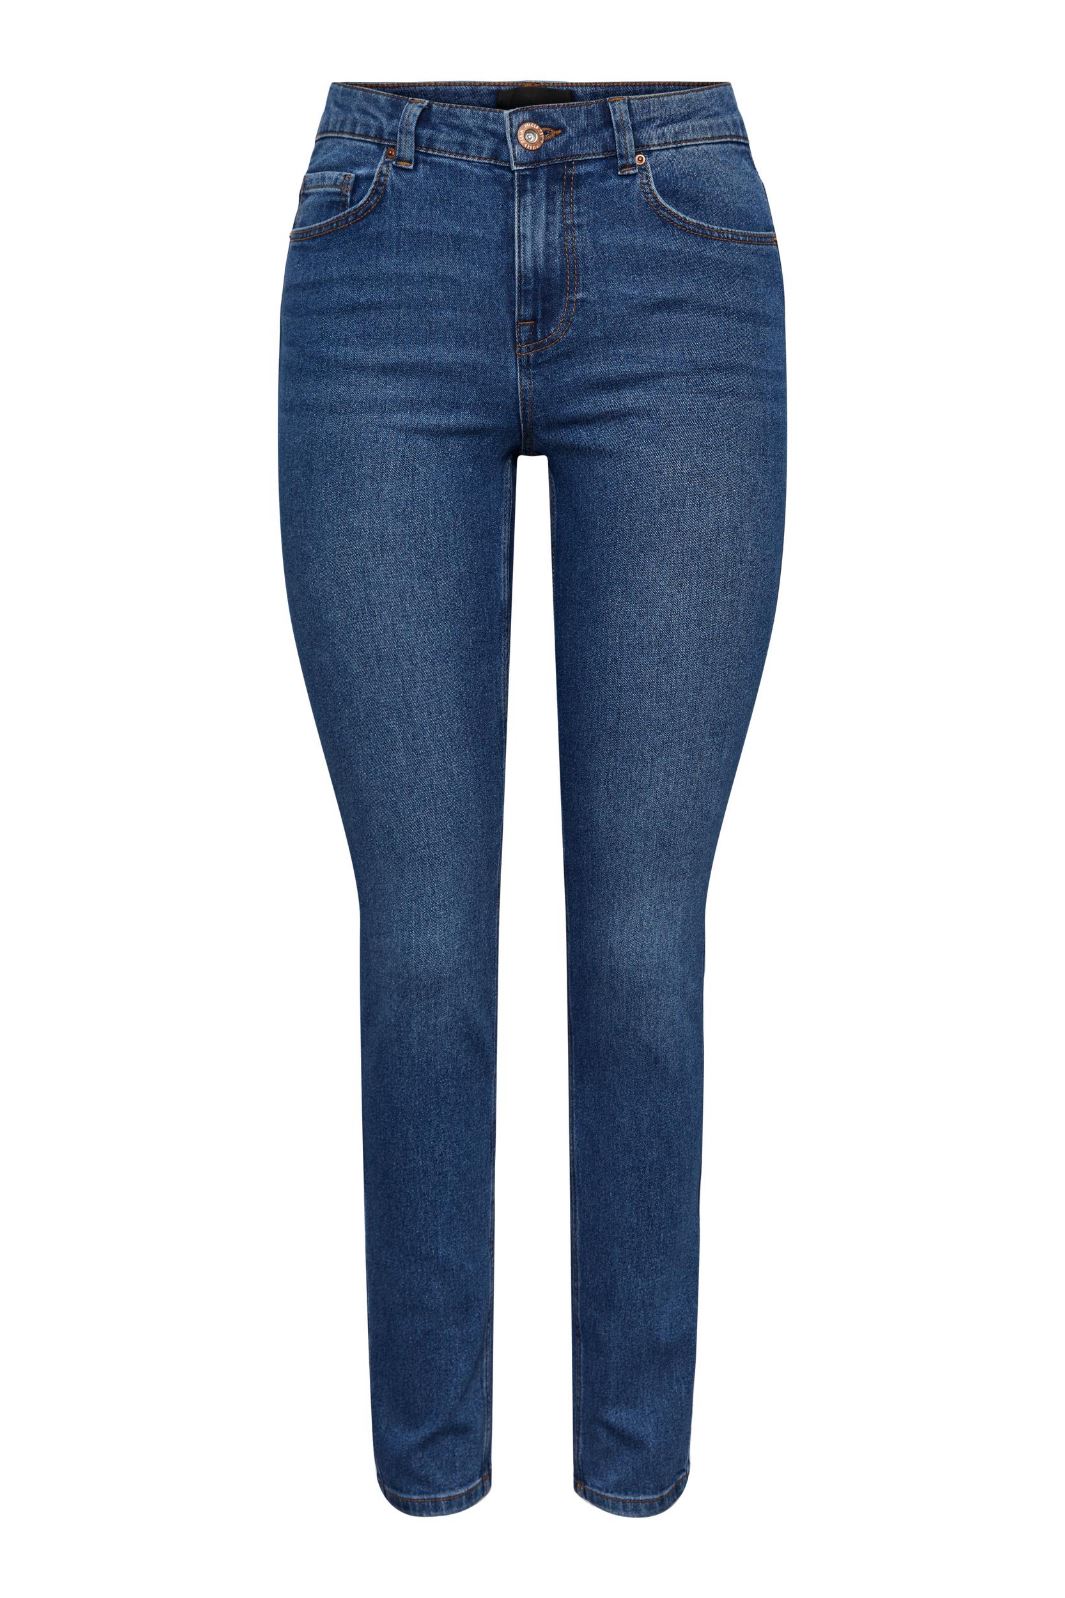 Pieces - Pcnunna Slim - 4291507 Medium Blue Denim Jeans 